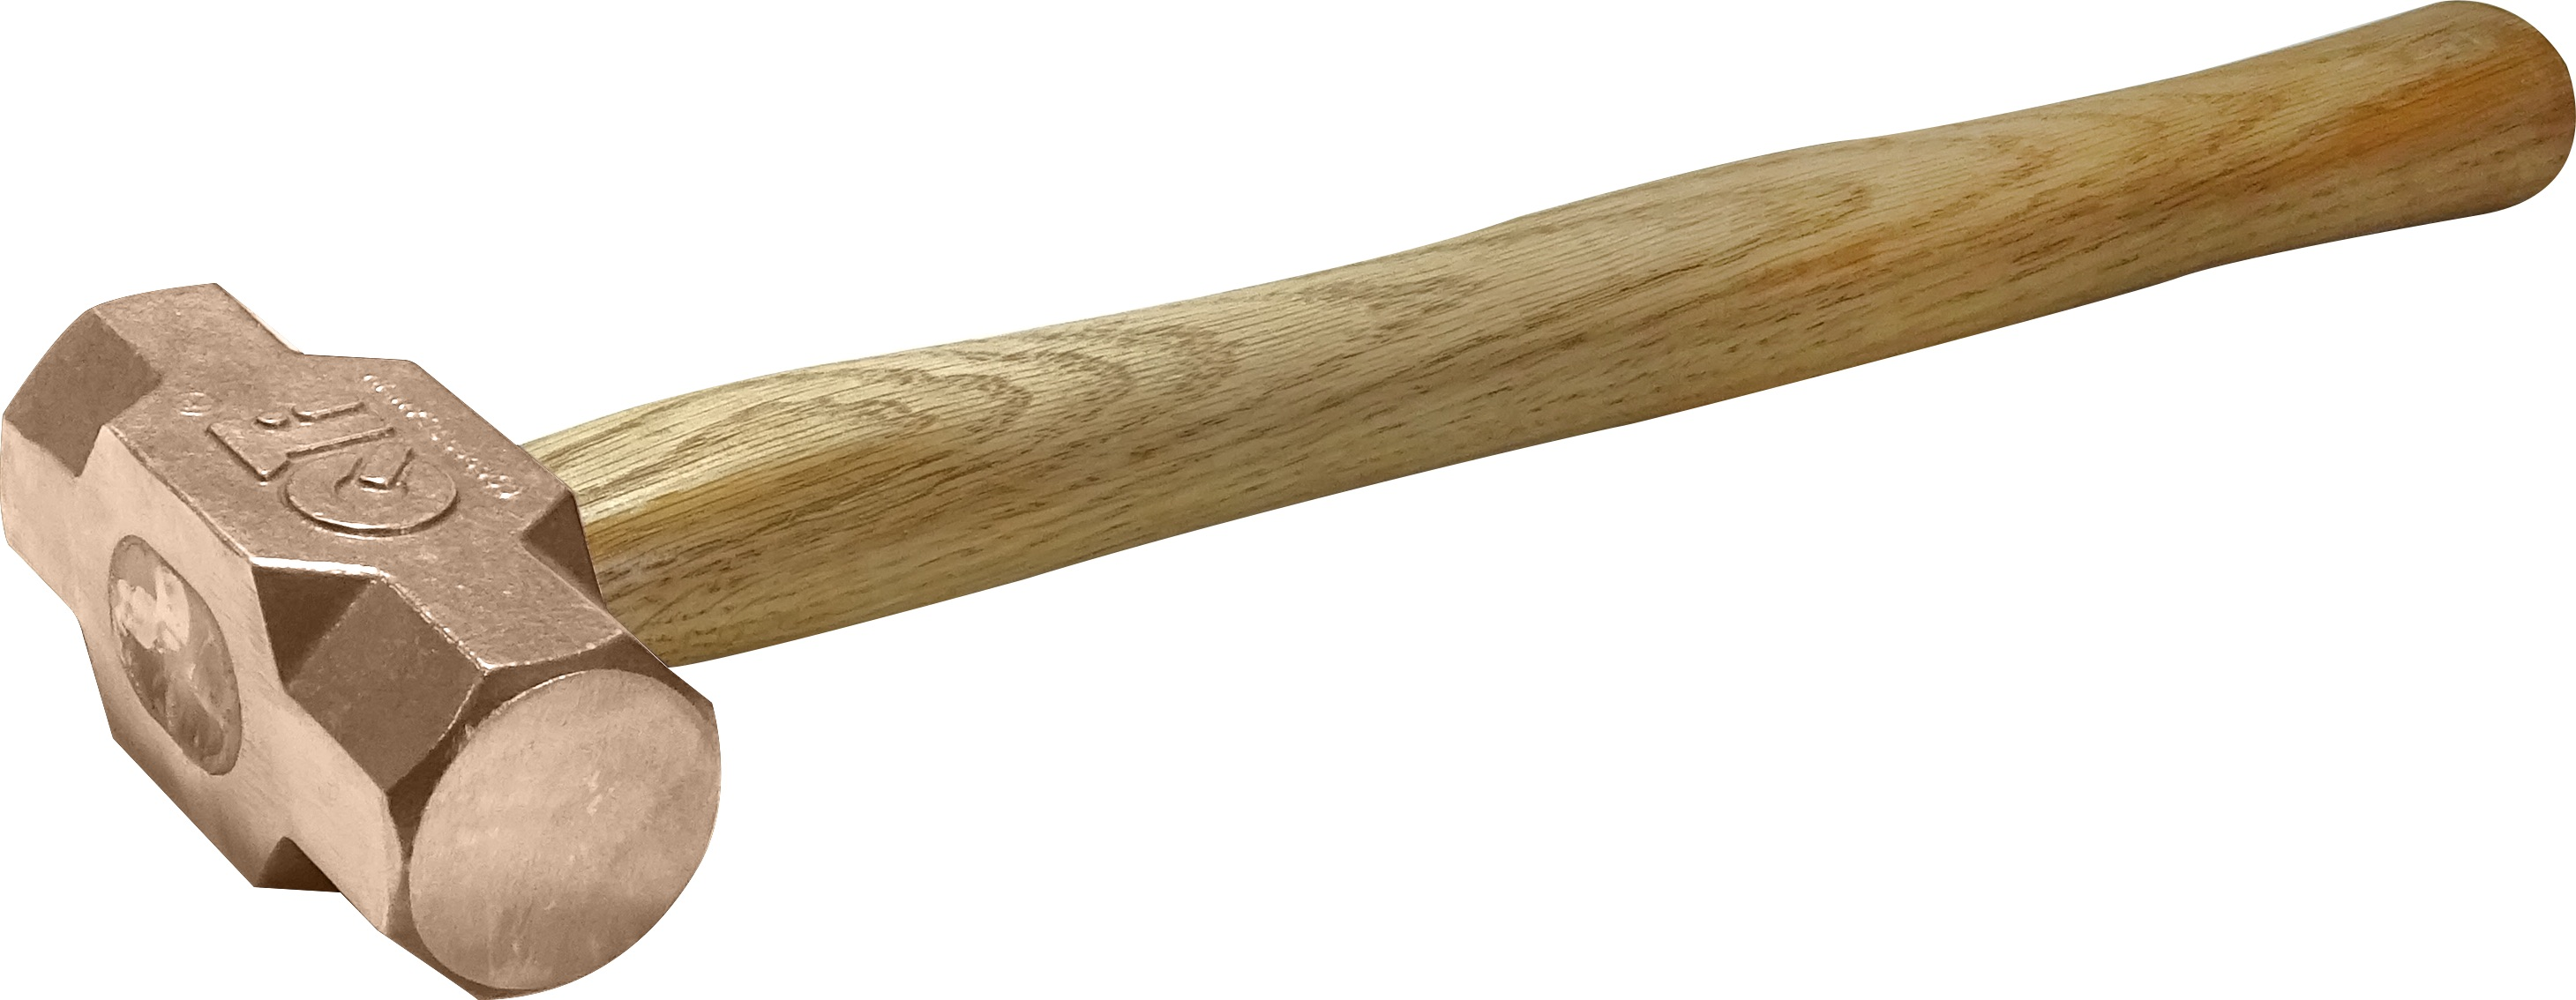 QTi® Vorschlaghammer - 4500g / 10 lbs (Holzgriff)